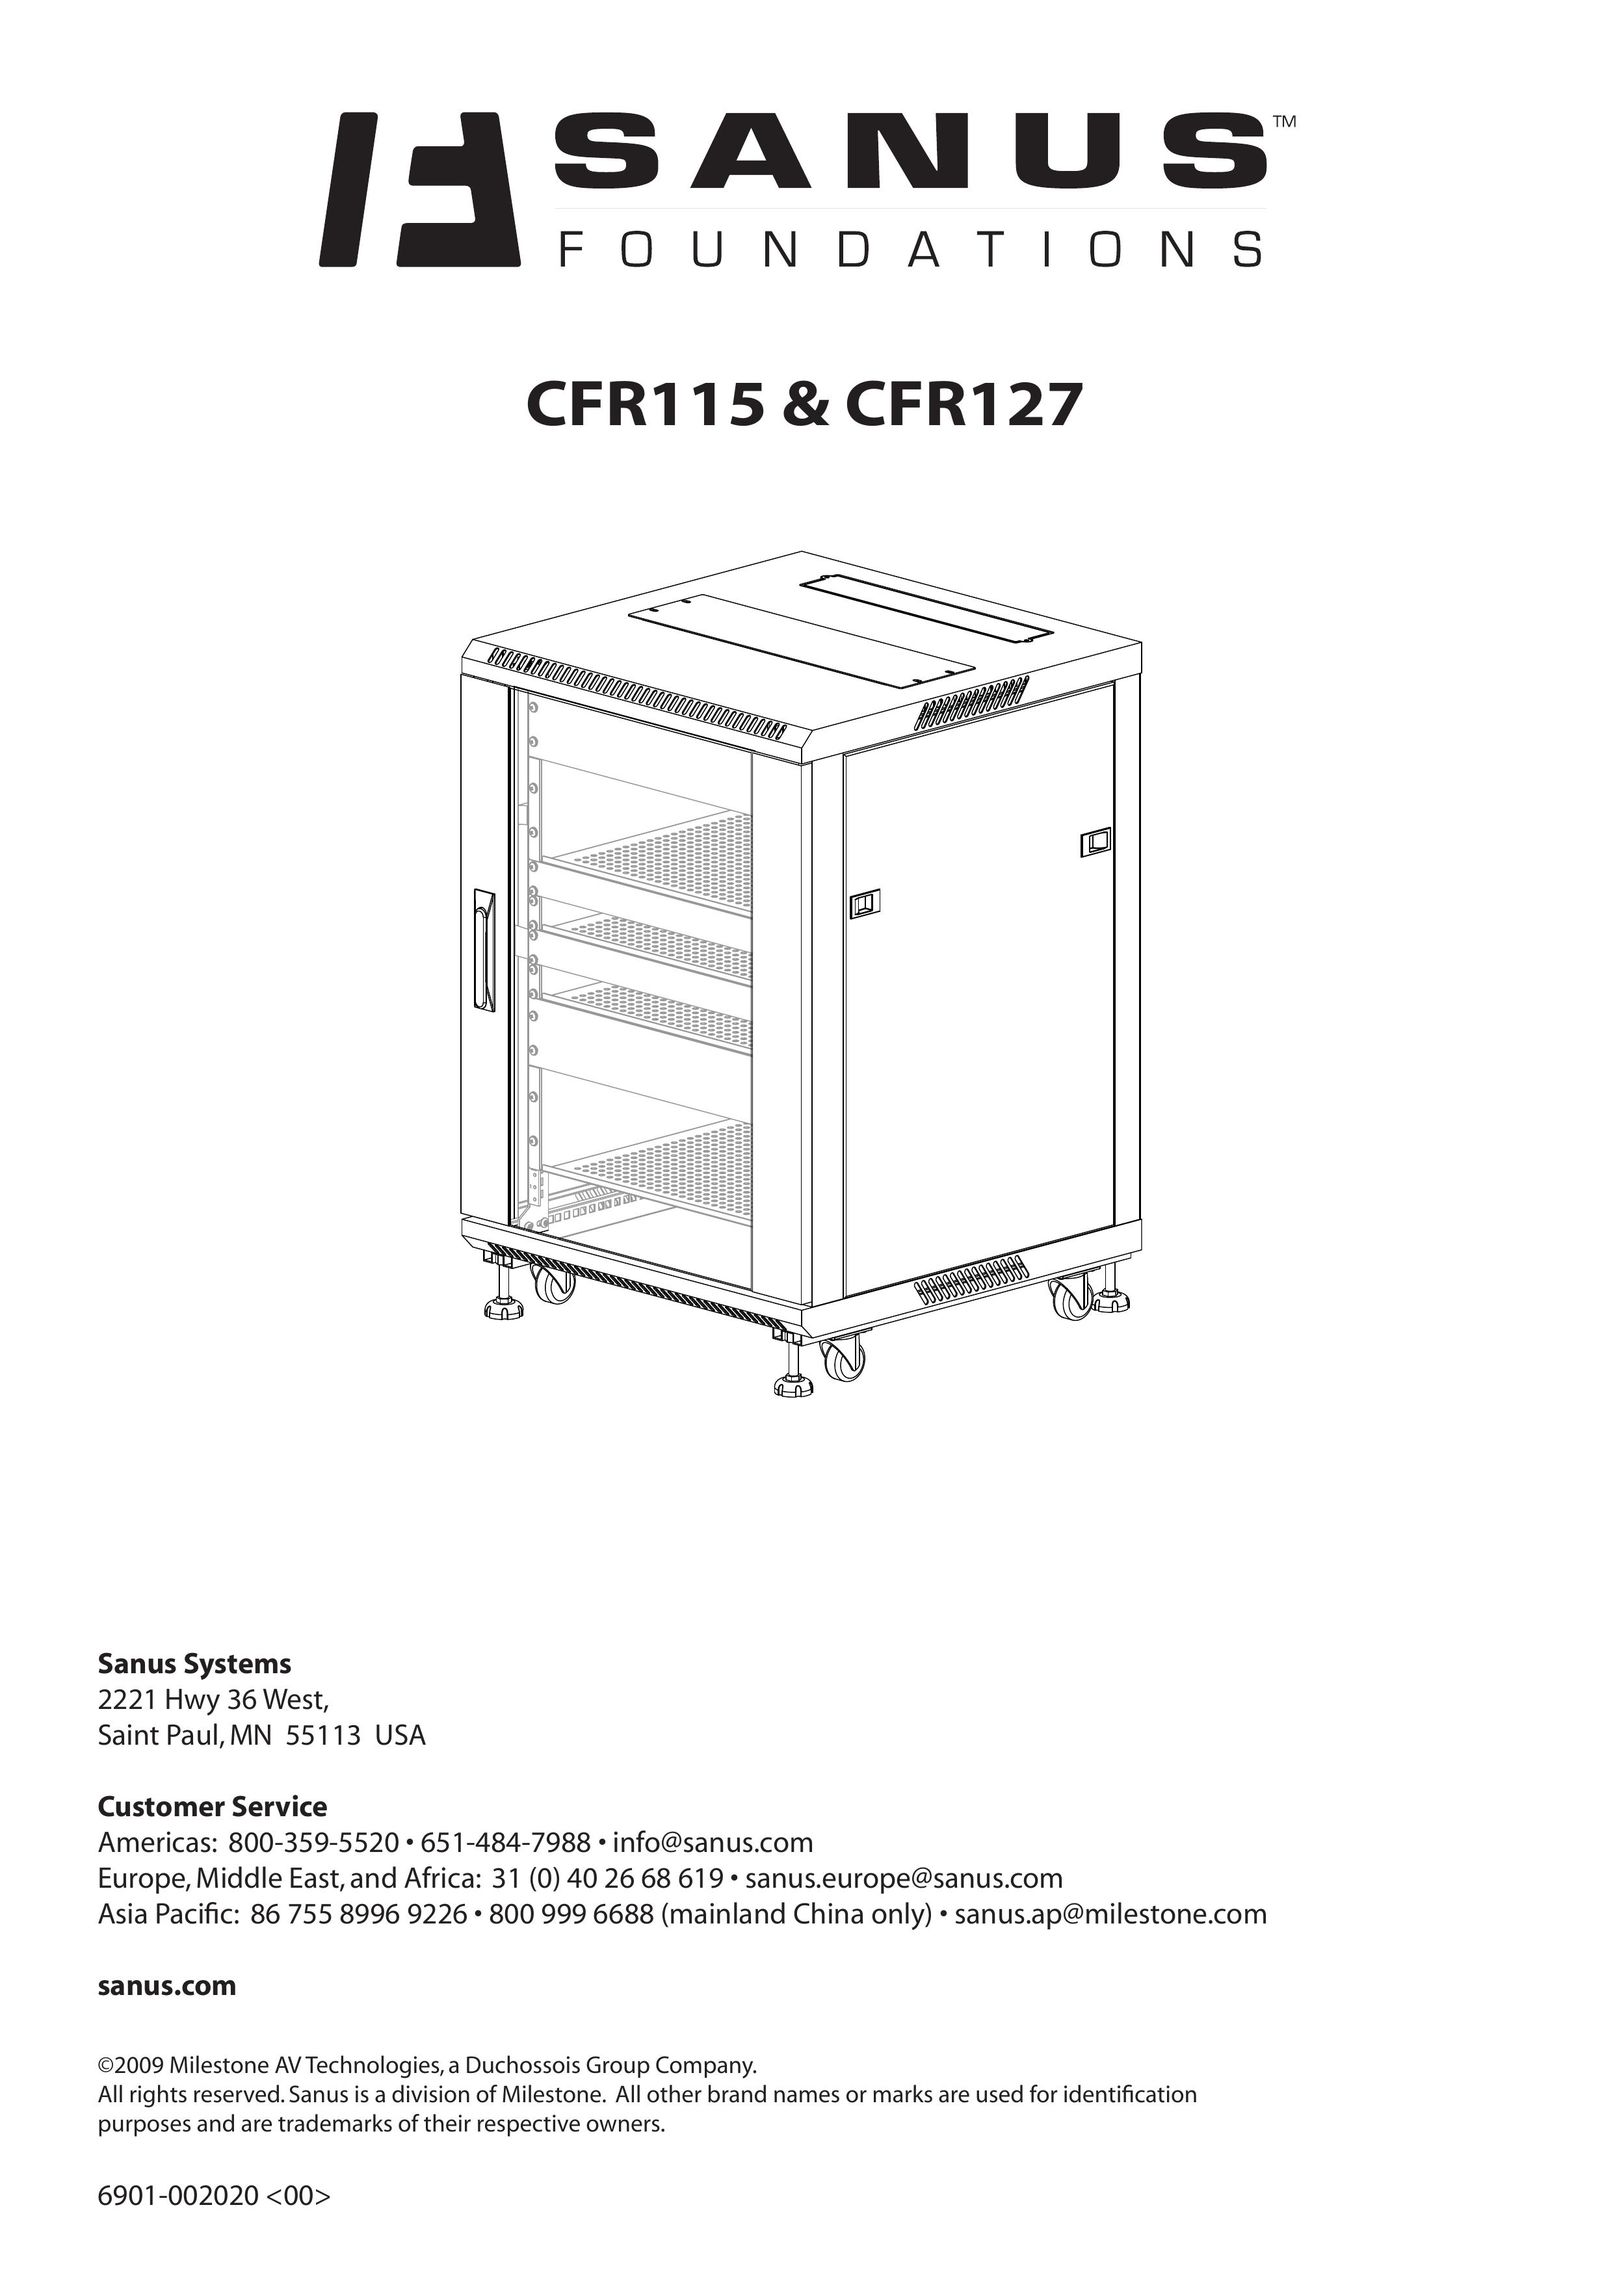 Sanus Systems CFR115 Indoor Furnishings User Manual